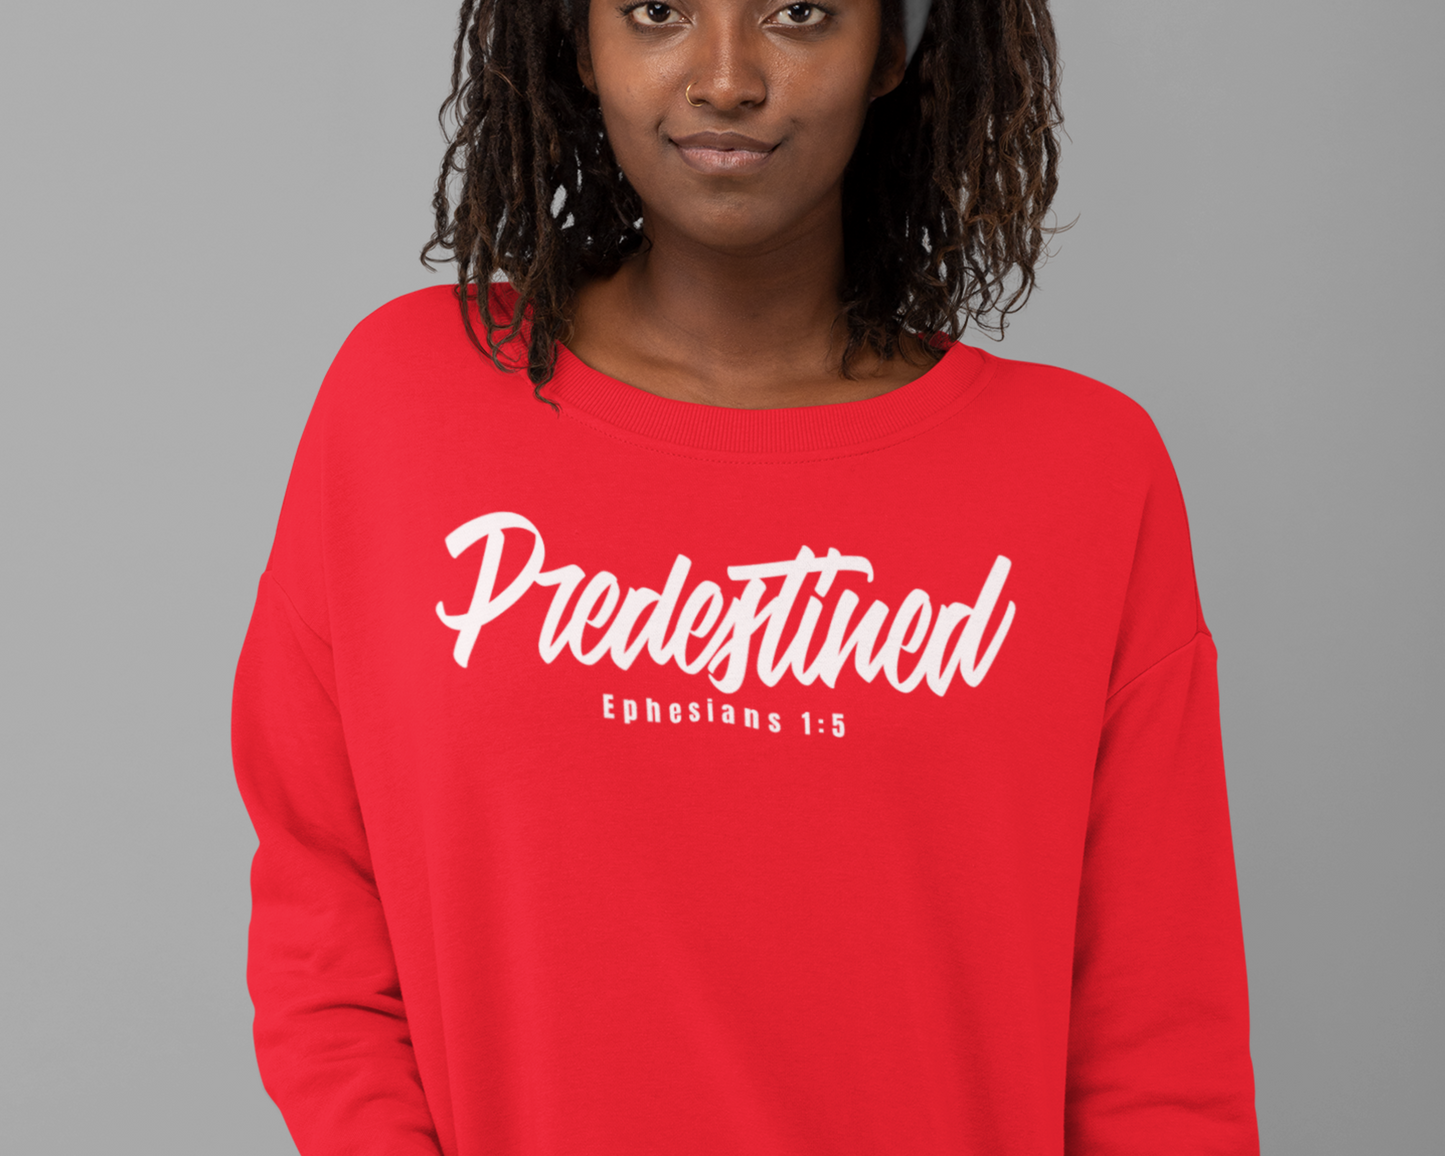 Predestined Womens Christian Sweatshirt